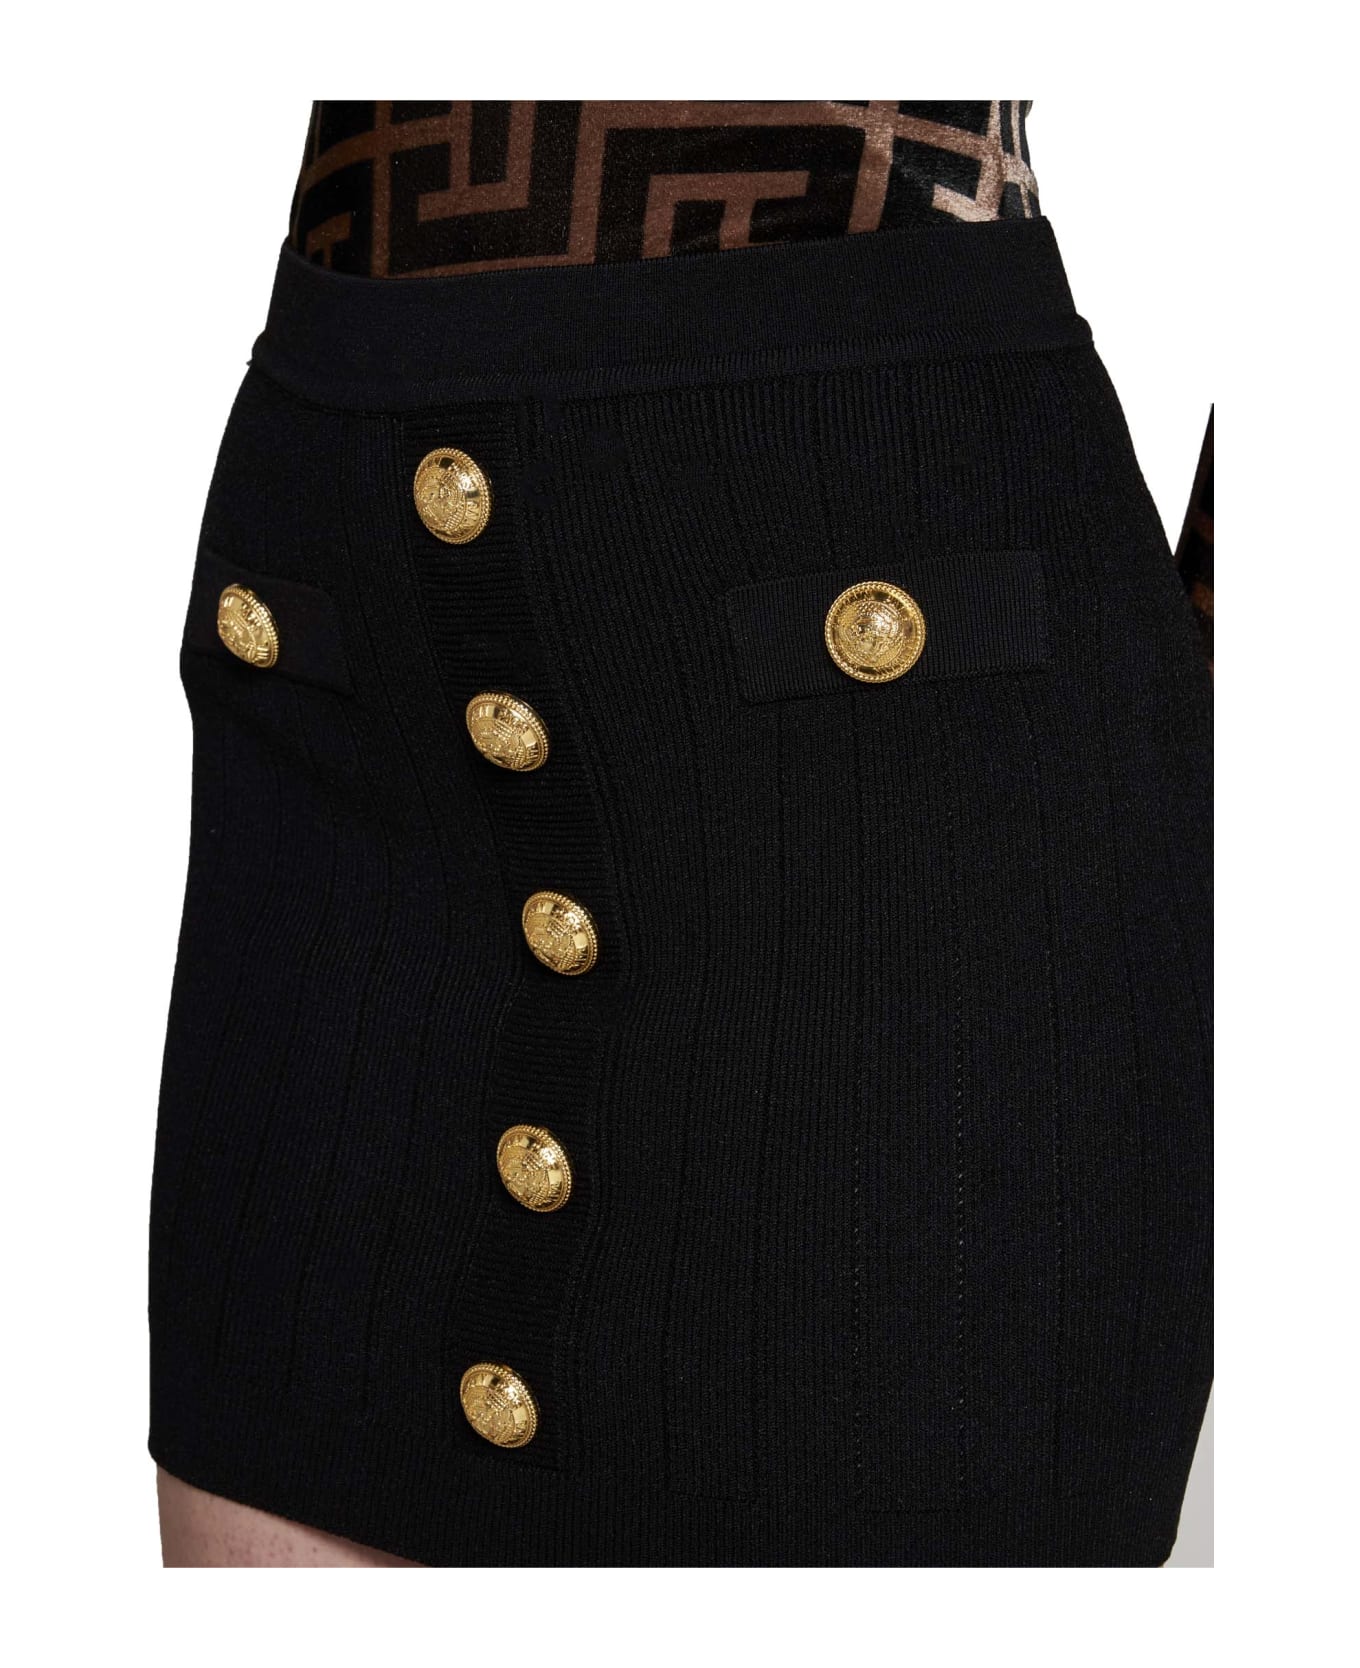 Balmain Skirt - Black